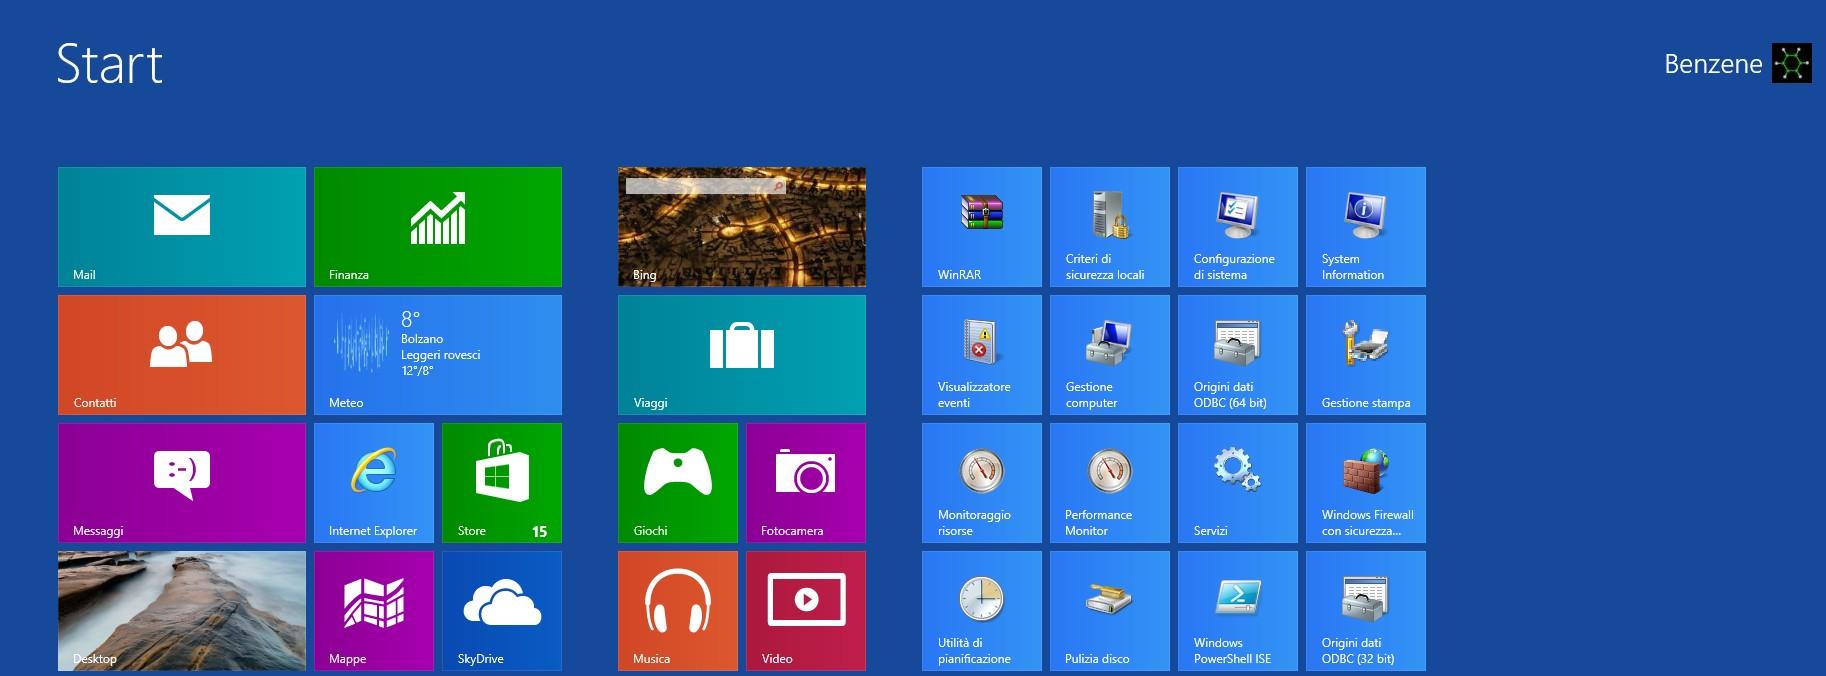 How To Activate Windows 8 Pro Build 9200 Windows 8 ...